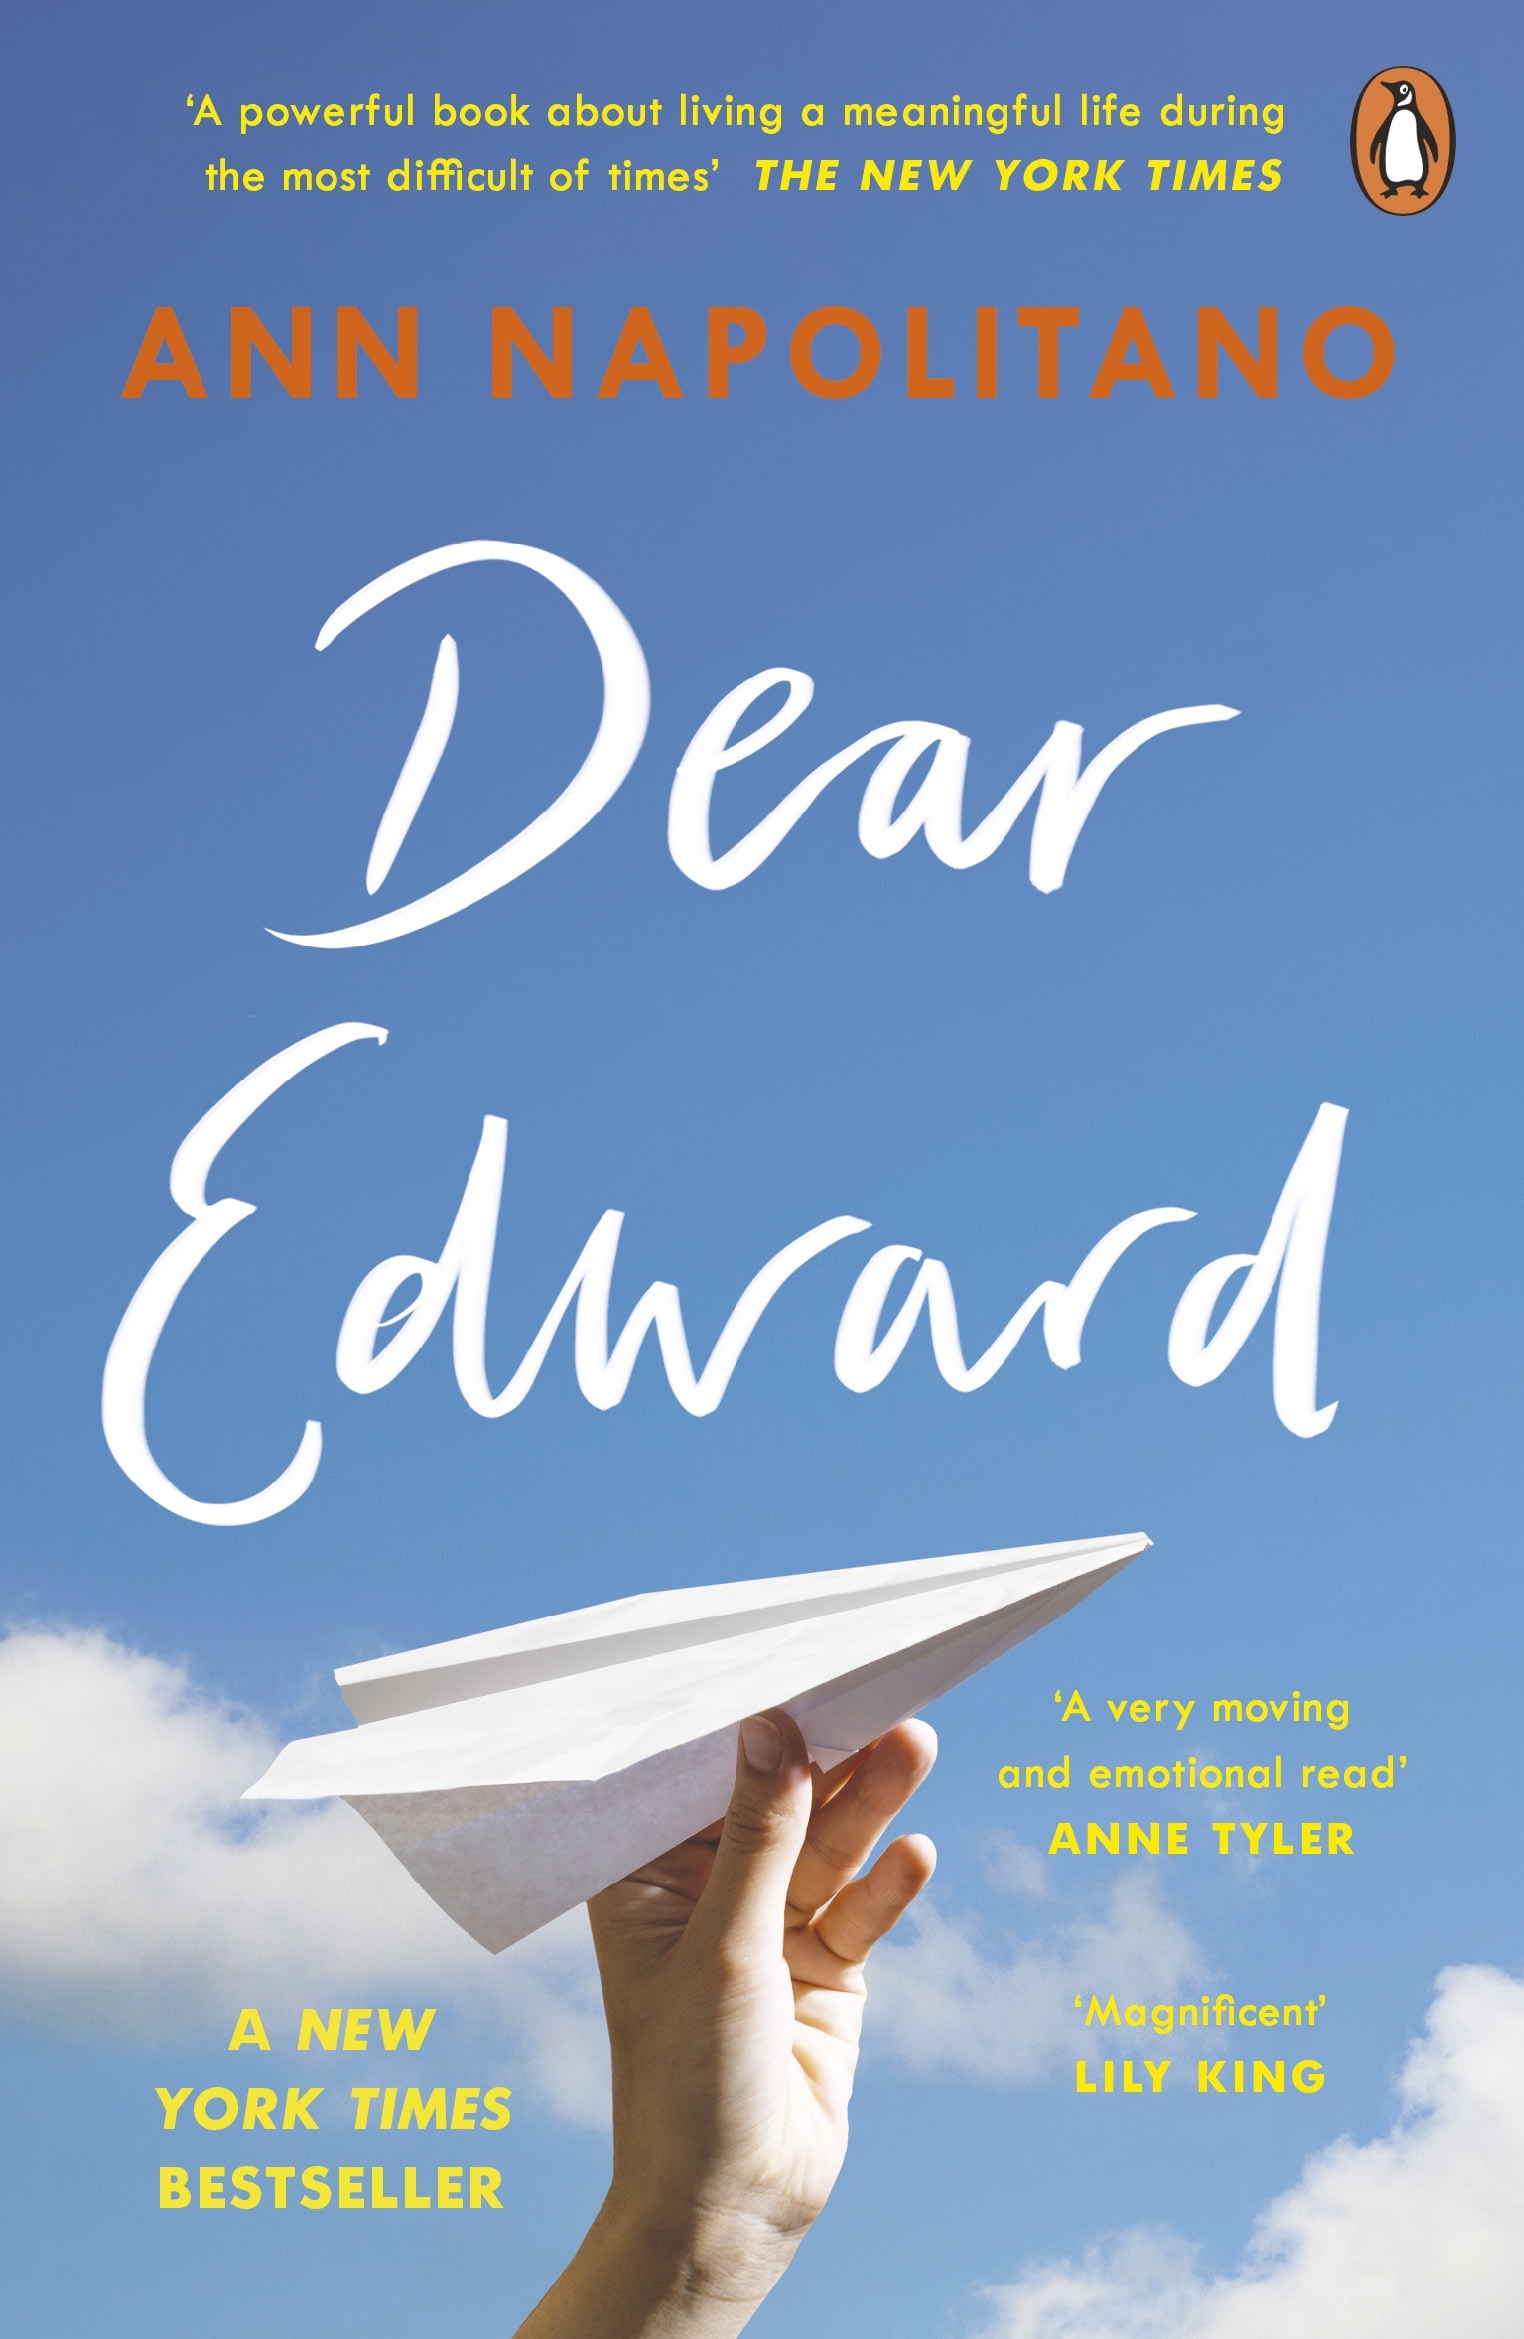 Book “Dear Edward” by Ann Napolitano — February 4, 2021